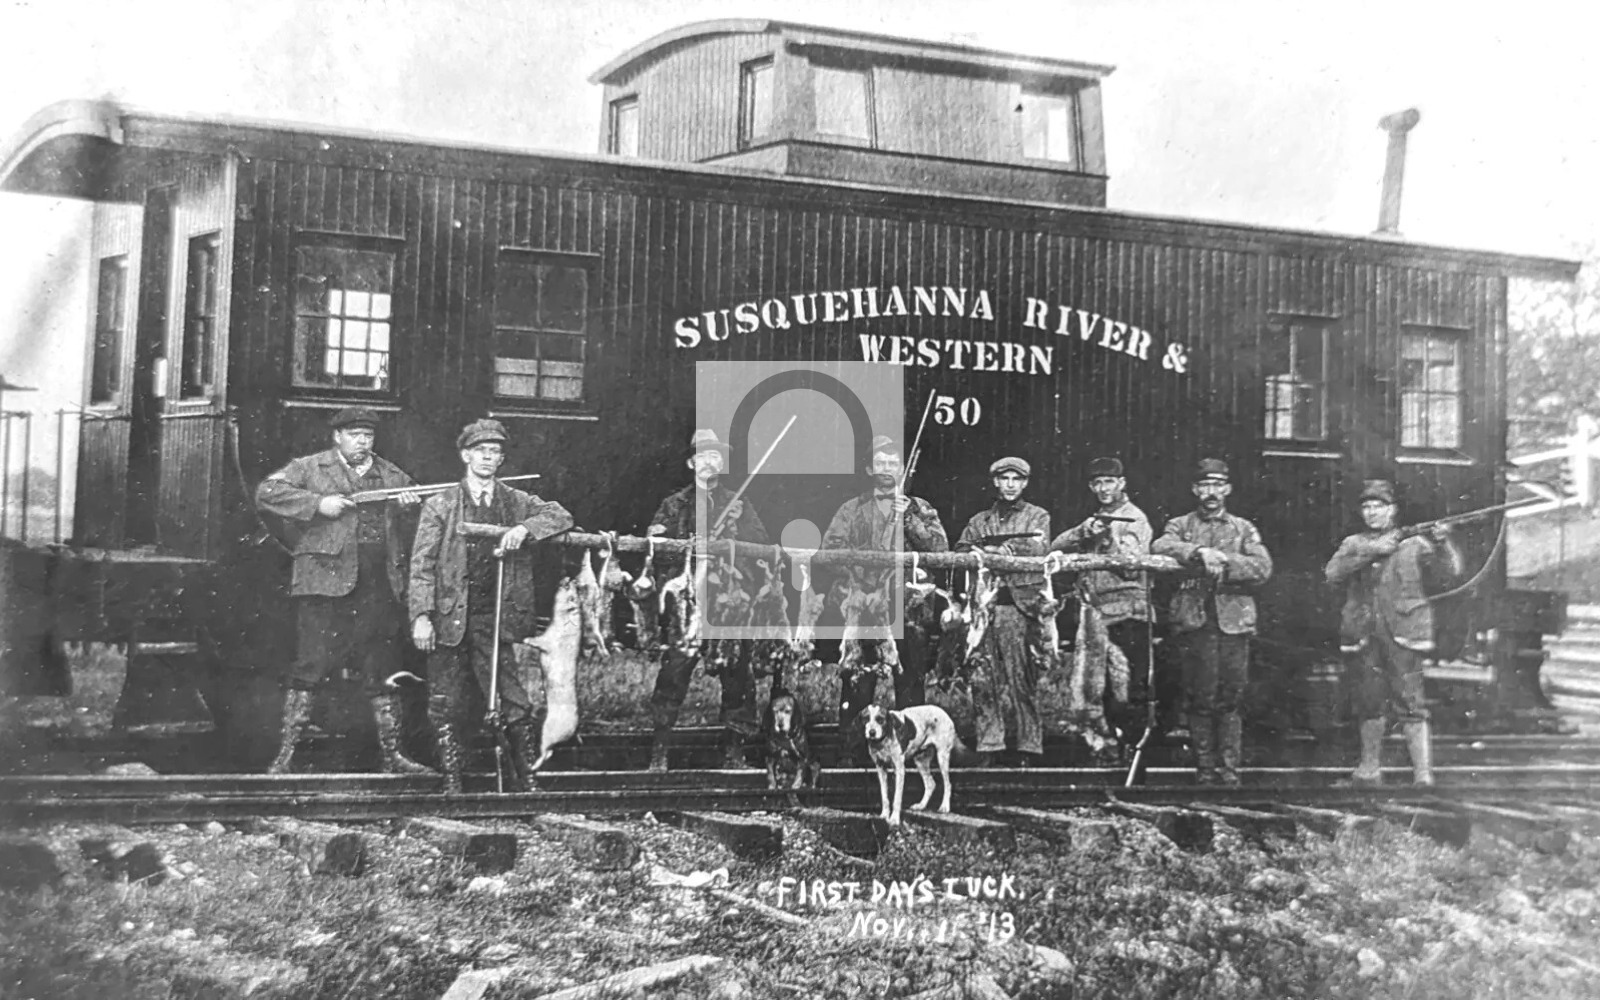 Hunters Susquehanna River & Western Railroad Pennsylvania PA